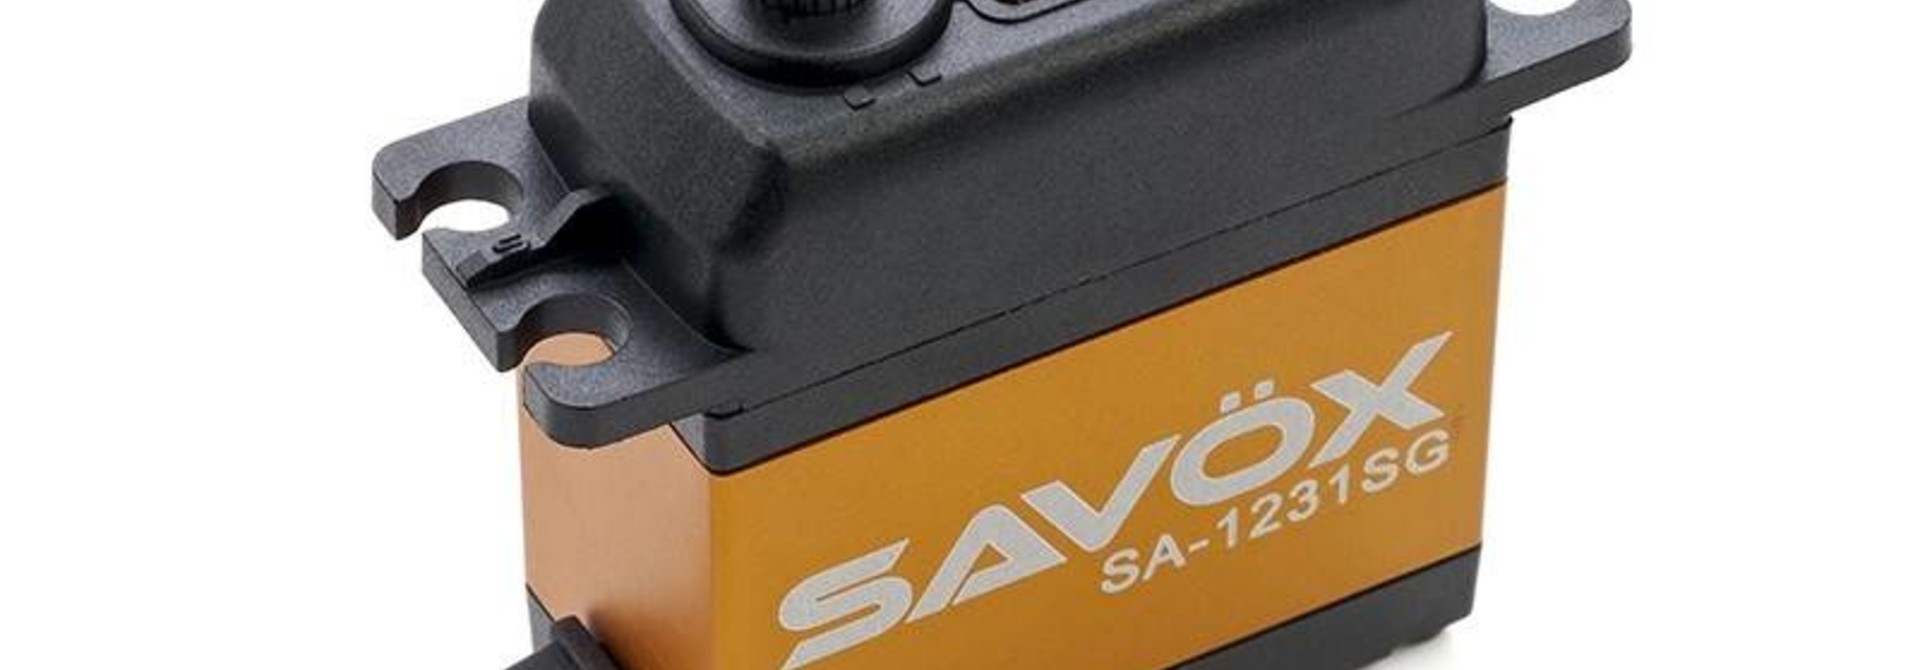 Savox - Servo - SA-1231SG - Digital - Coreless Motor - Staal tandwielen